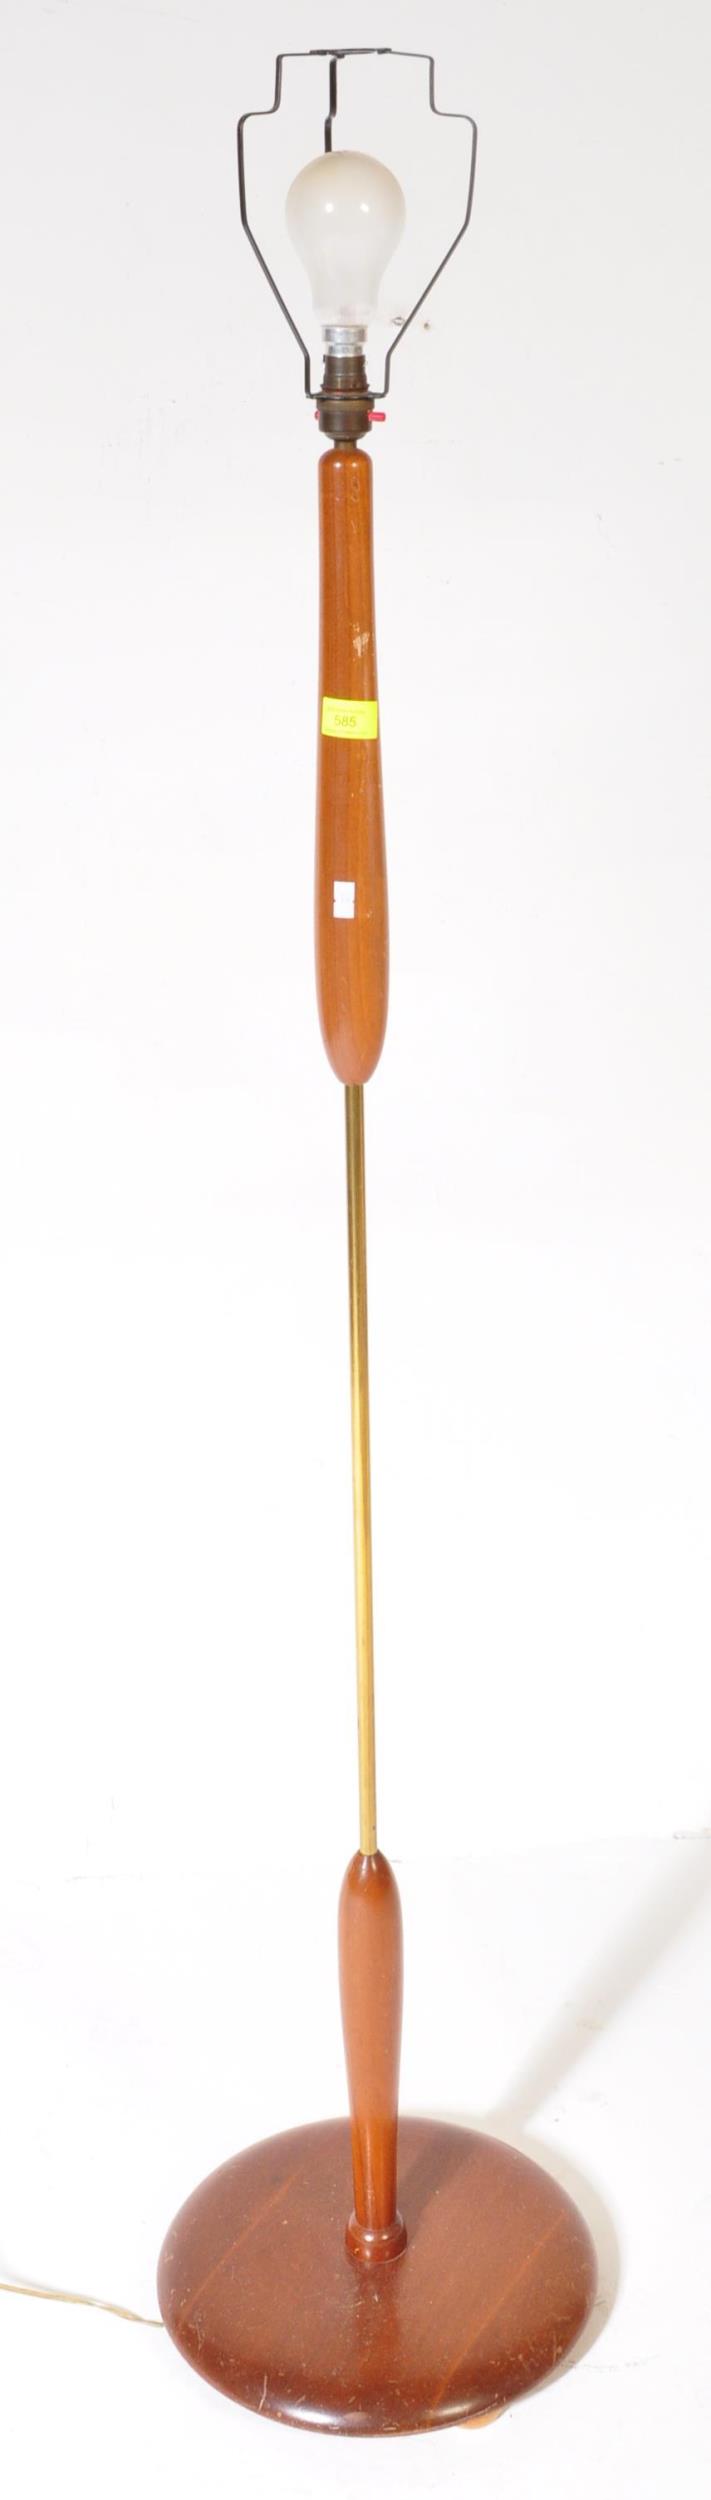 RETRO VINTAGE DANISH INSPIRED TEAK FLOOR STANDARD LAMP - Image 2 of 4